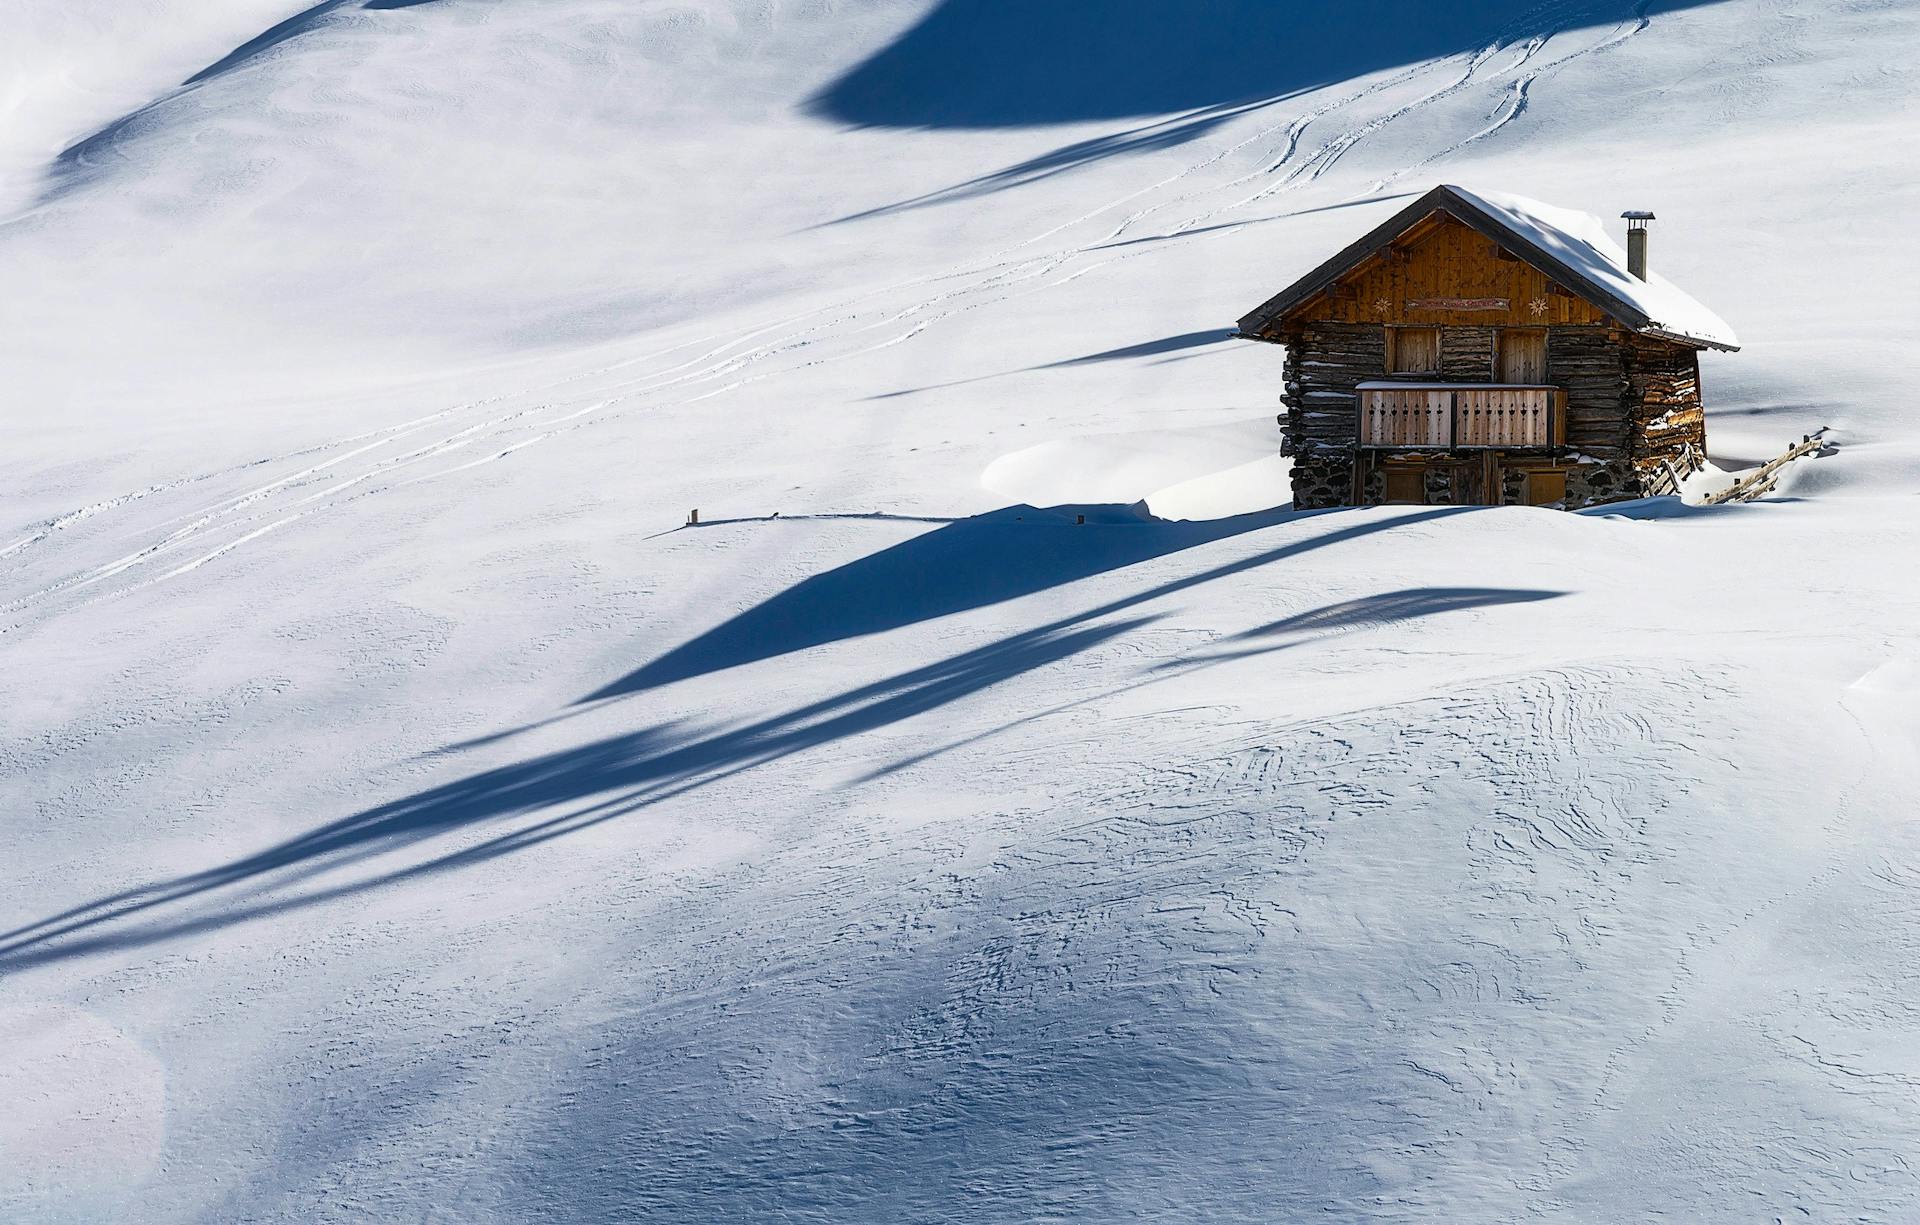 Isolated cabin on ski slope